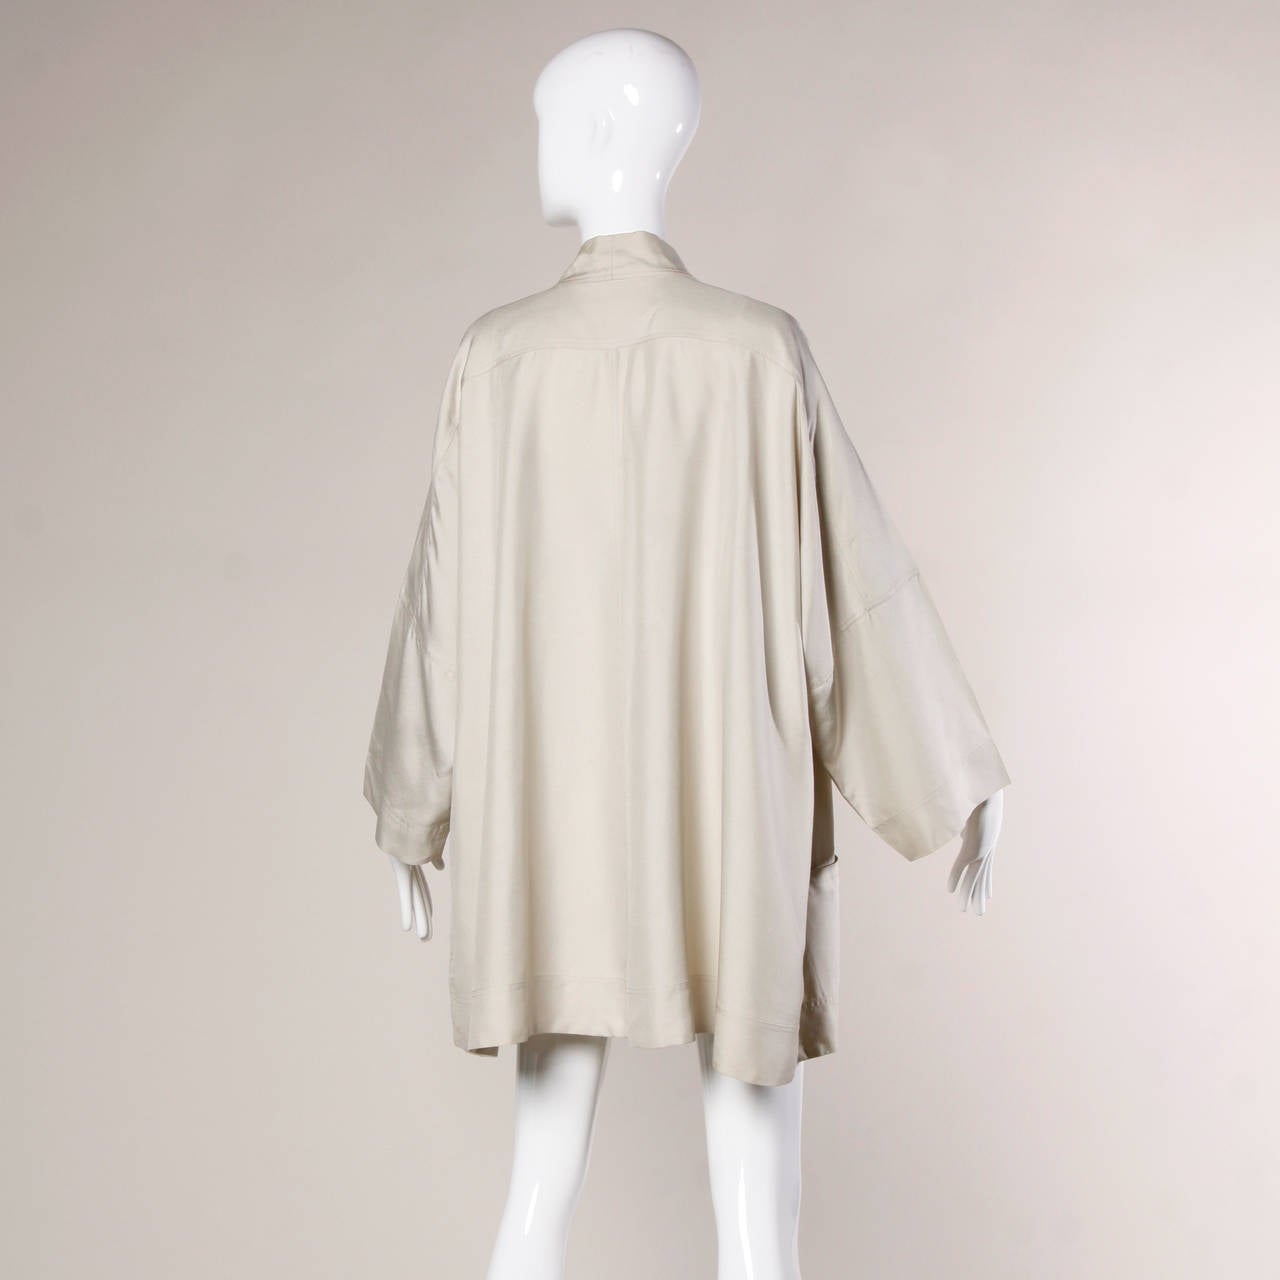 Stunning Salvatore Ferragamo Vintage Silk Kimono Jacket or Swing Coat 1